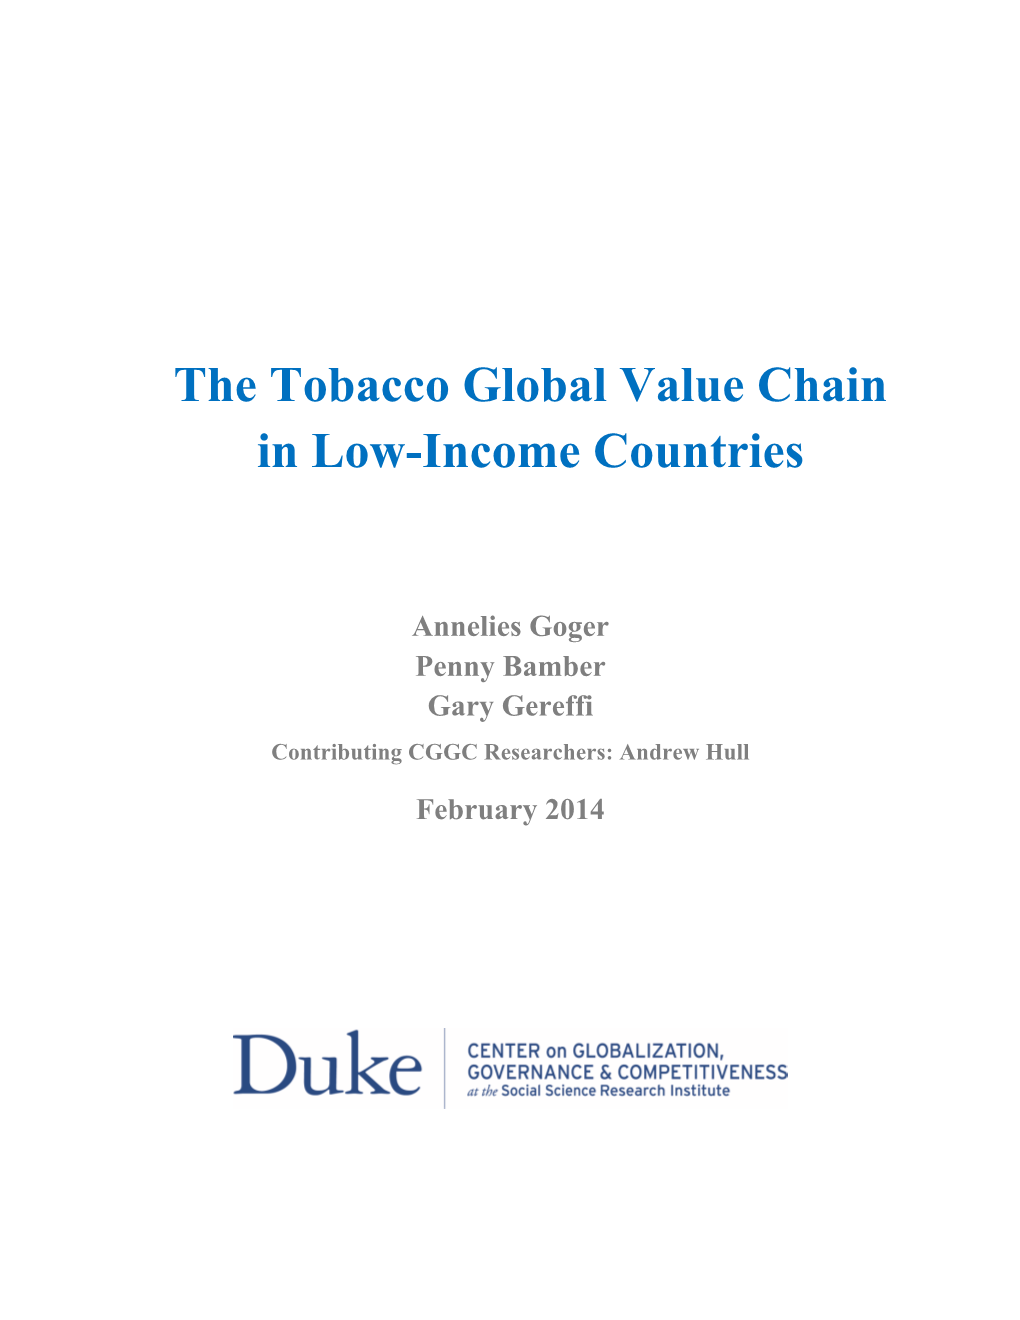 2014-02-05 Duke CGGC WHO-UNCTAD Tobacco GVC Report